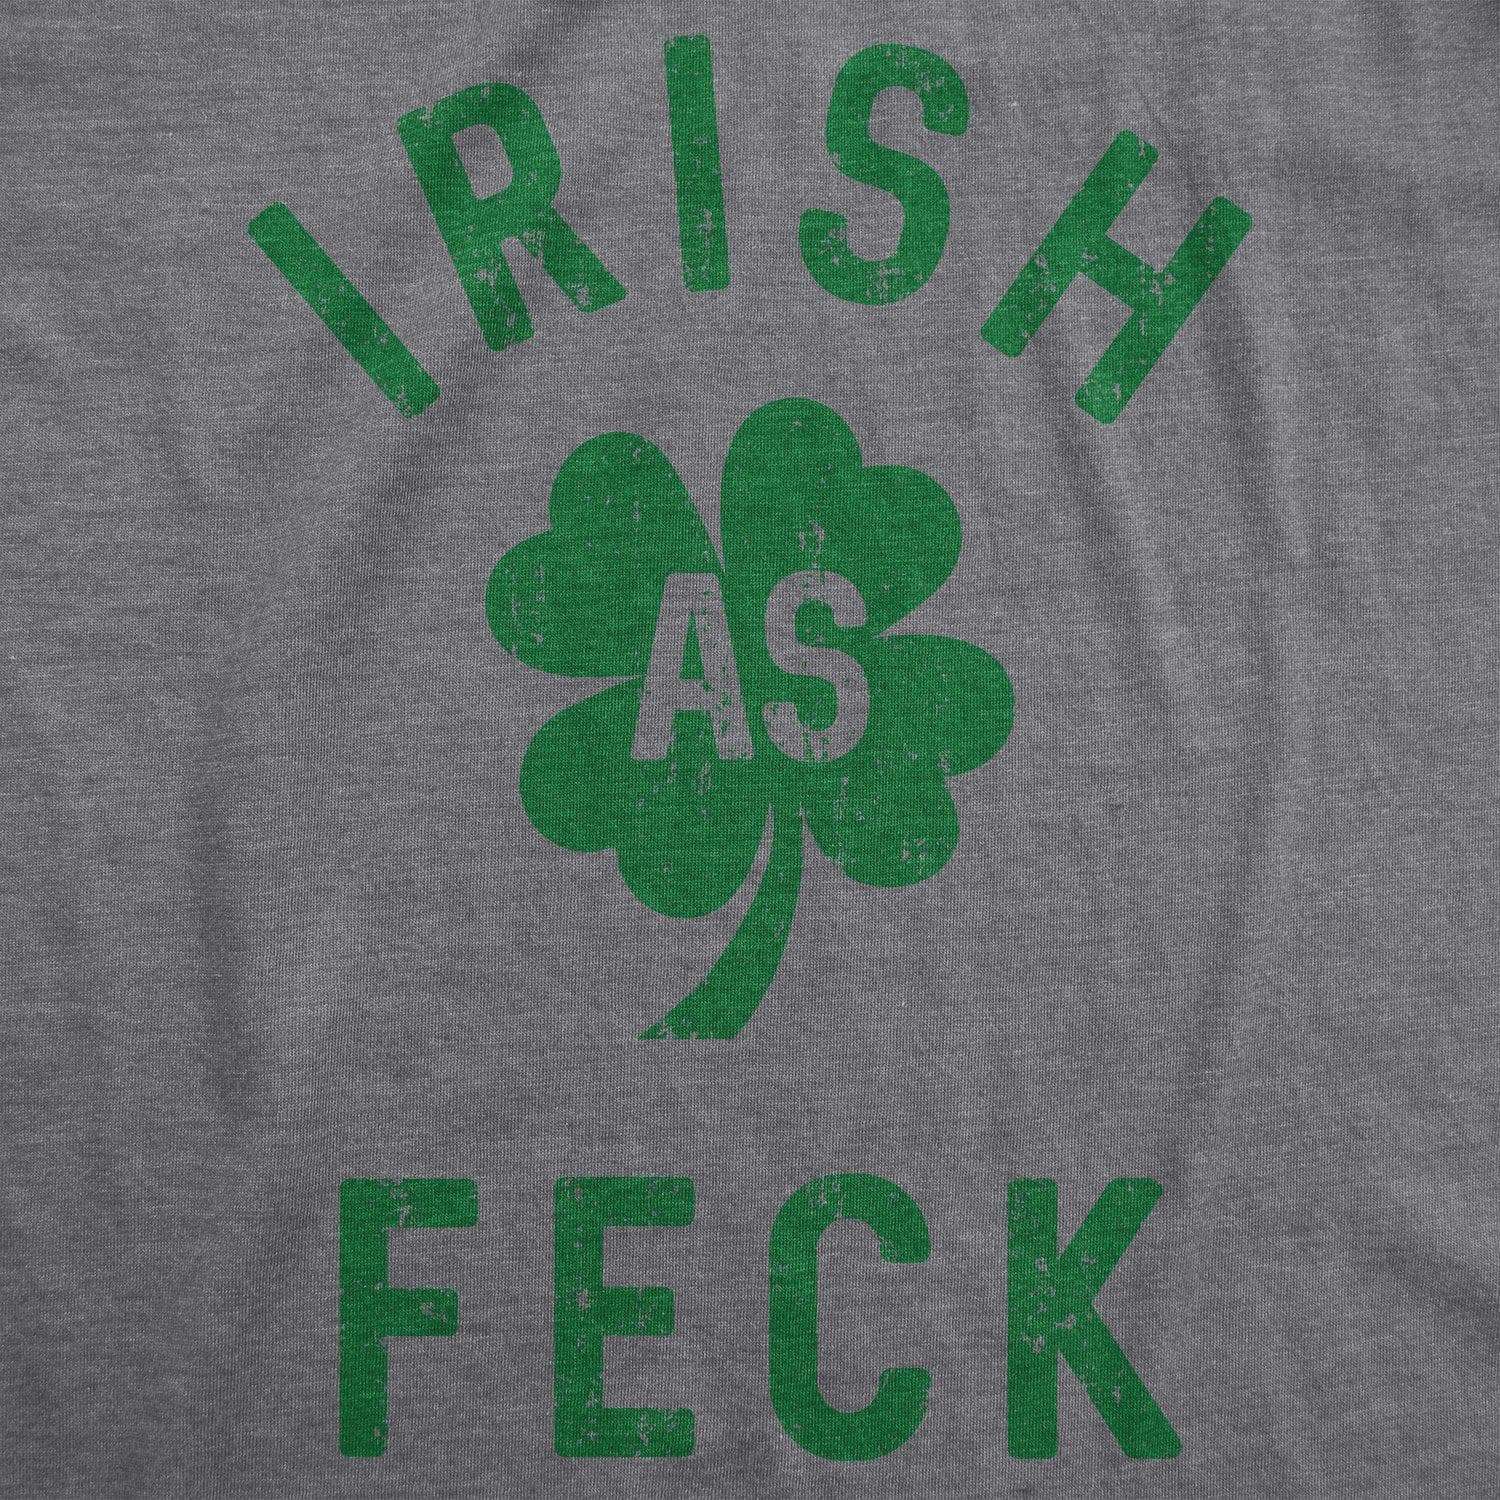 Irish As Feck Men's Tshirt  -  Crazy Dog T-Shirts